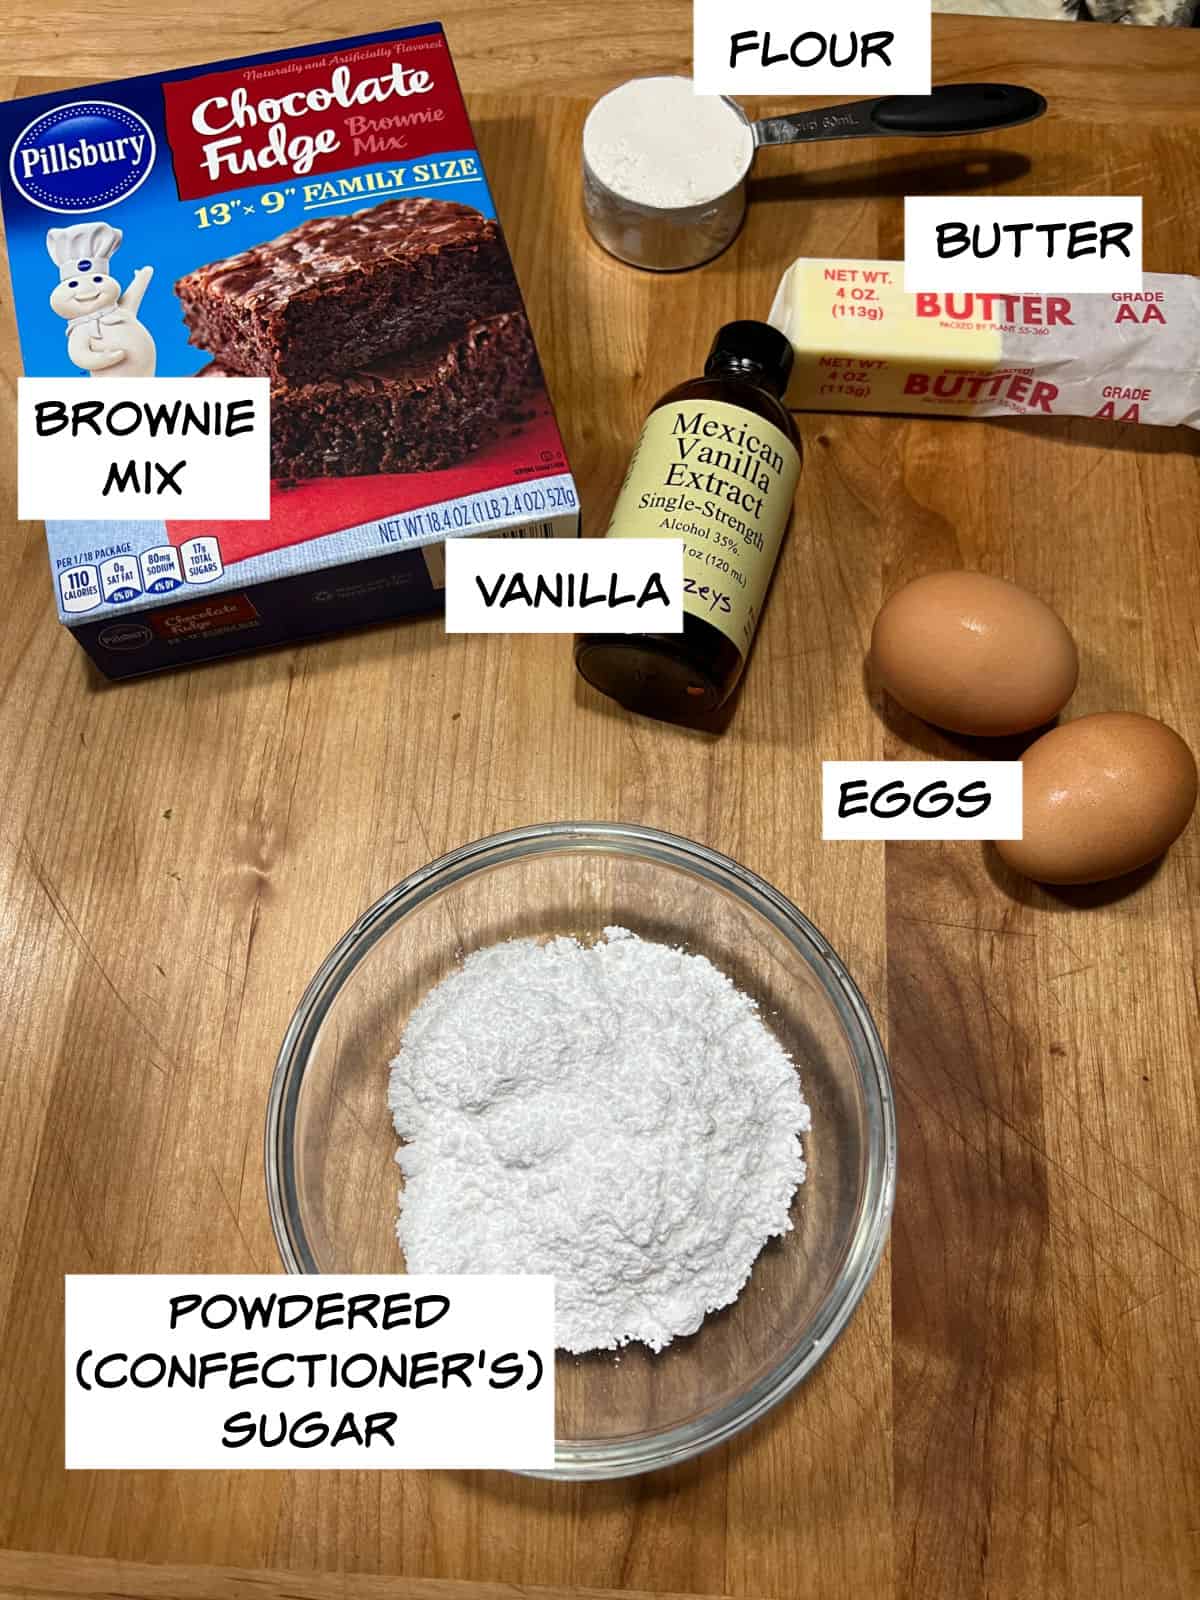 Ingredients: brownie mix, flour, butter, eggs, vanilla, and powdered sugar.